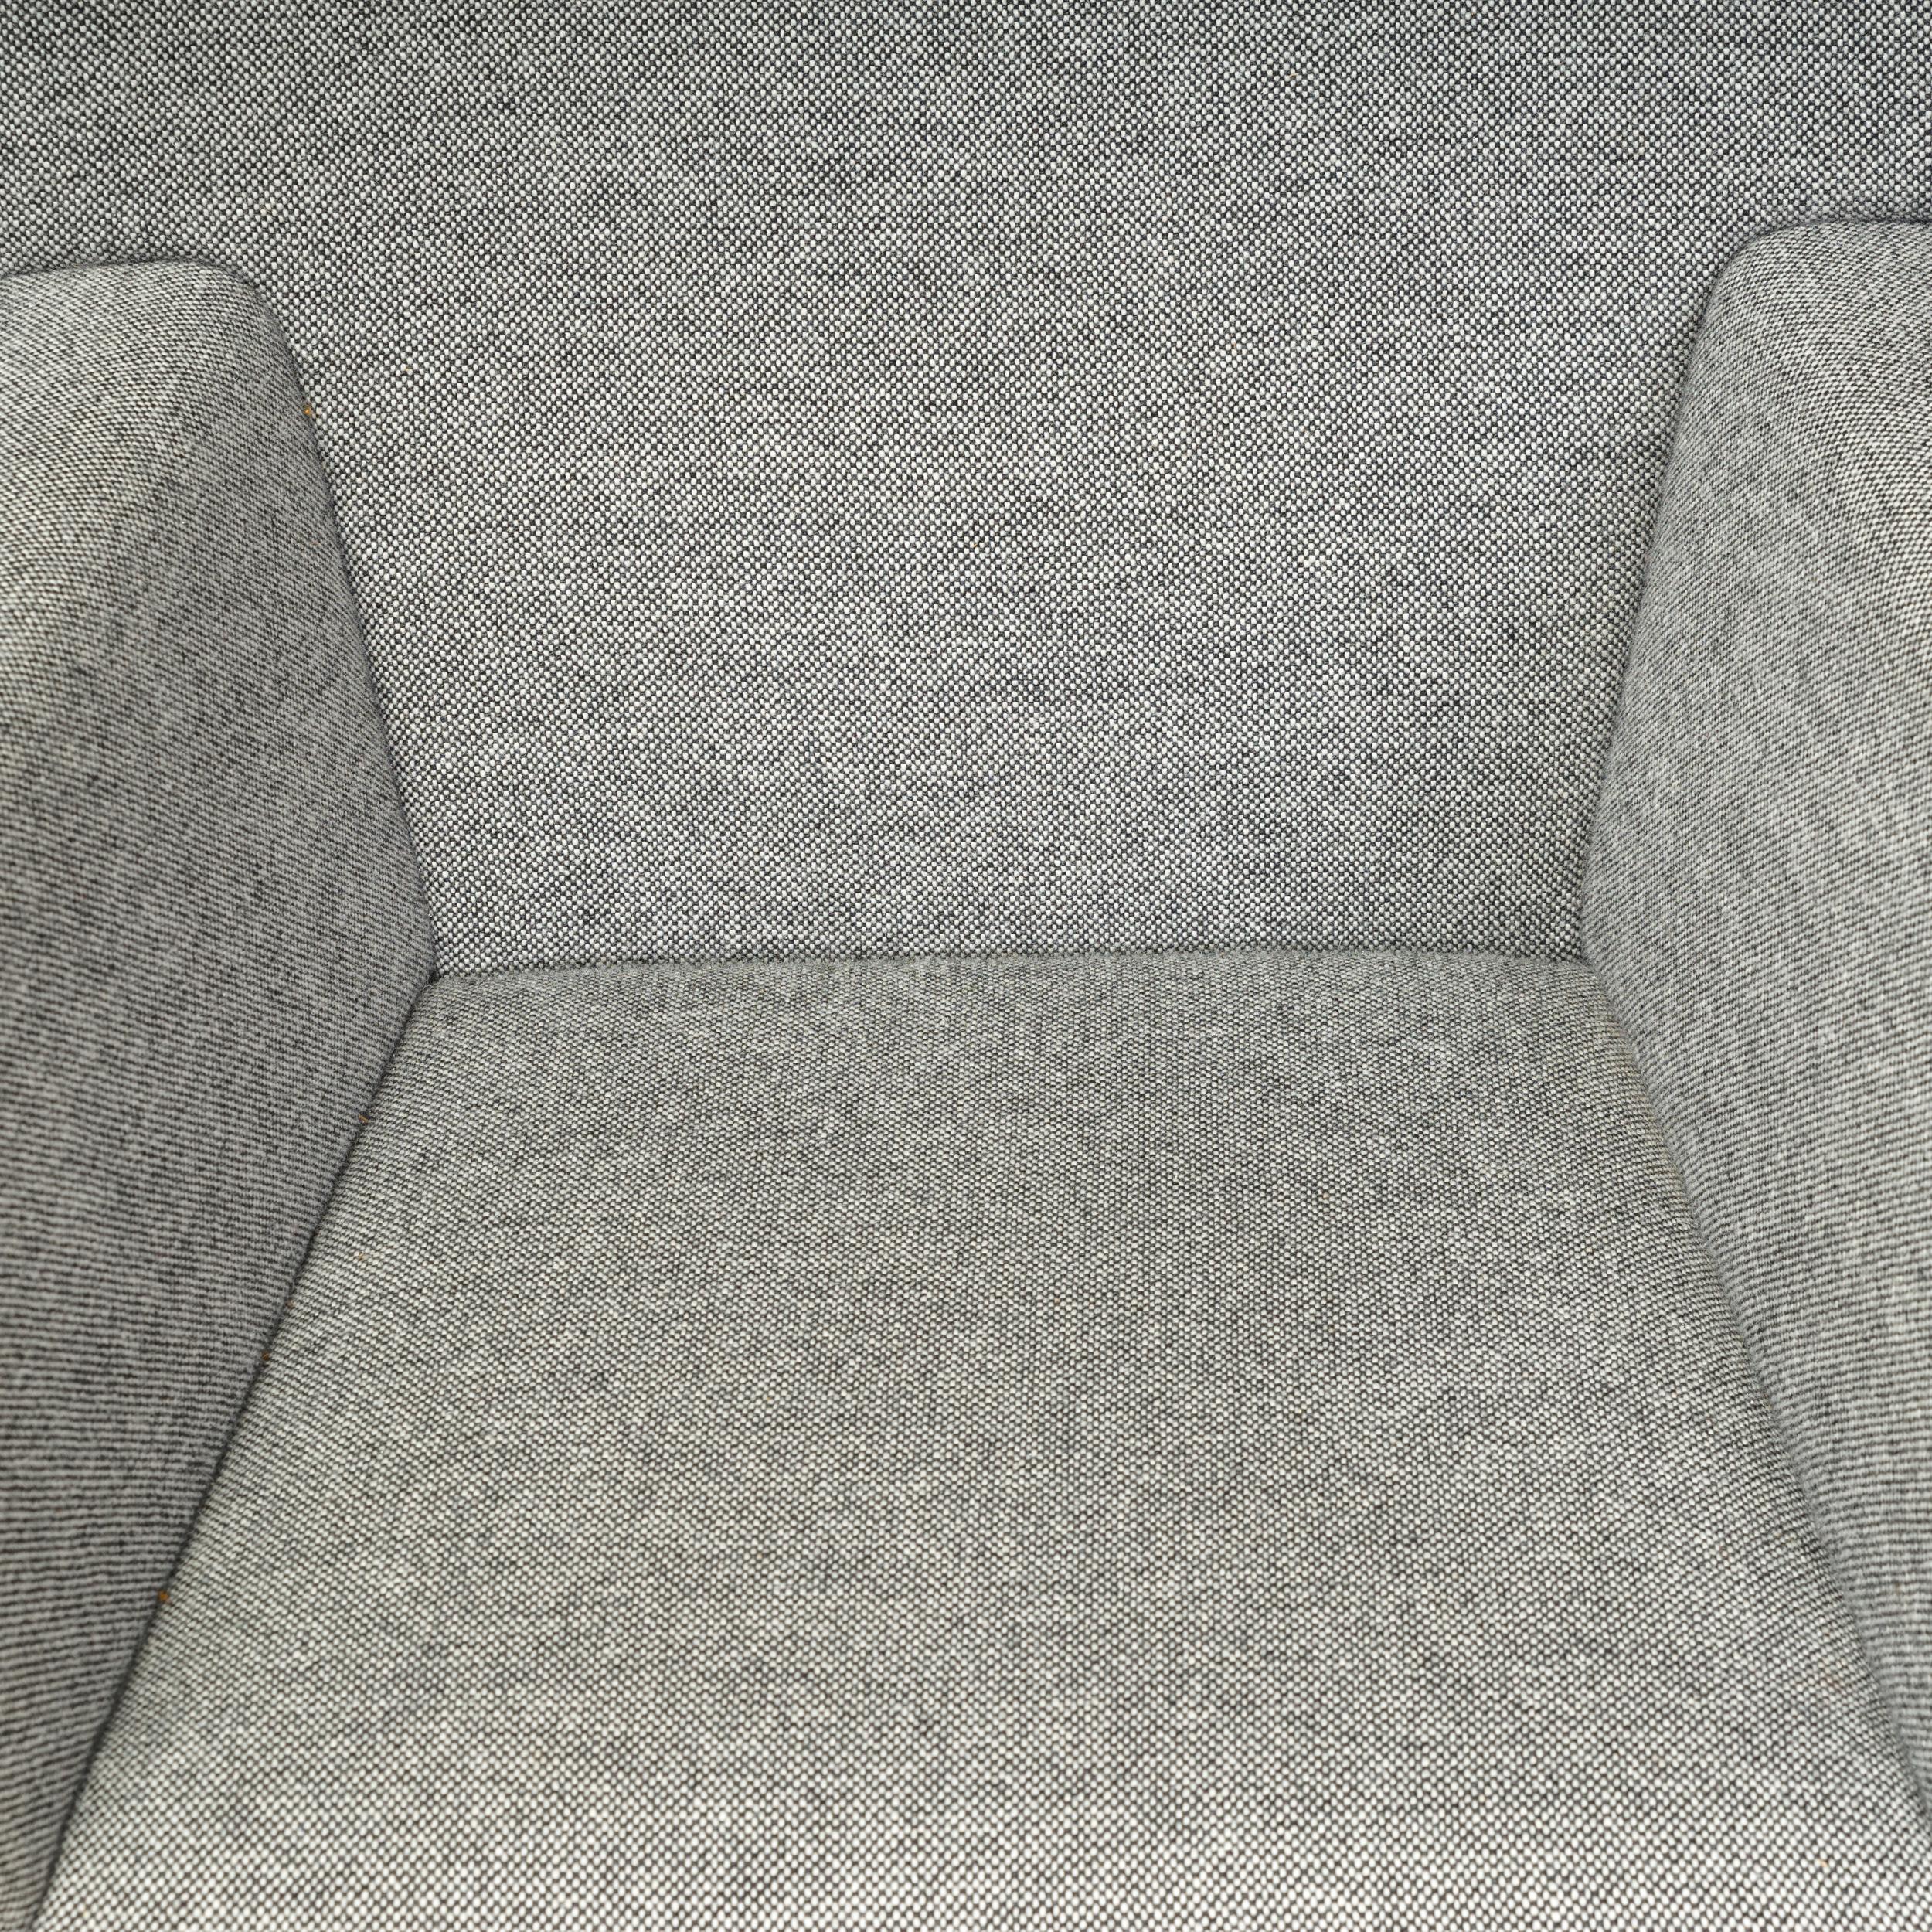 Hans J. Wegner for Carl Hansen Grey Fabric  CH445 Wing Chair, Set of 2 1